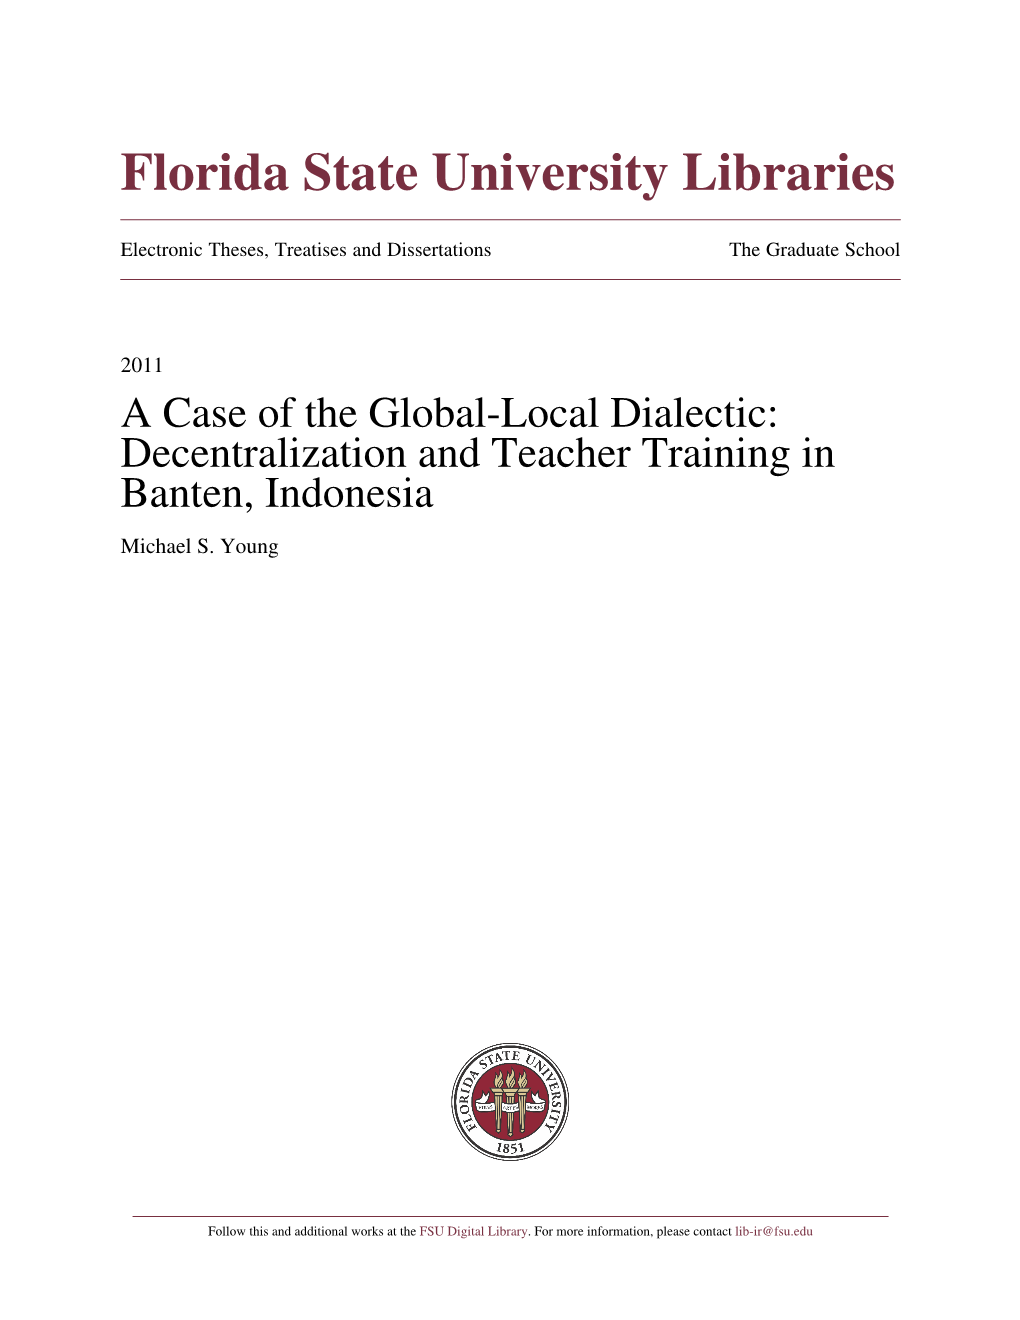 Decentralization and Teacher Training in Banten, Indonesia Michael S